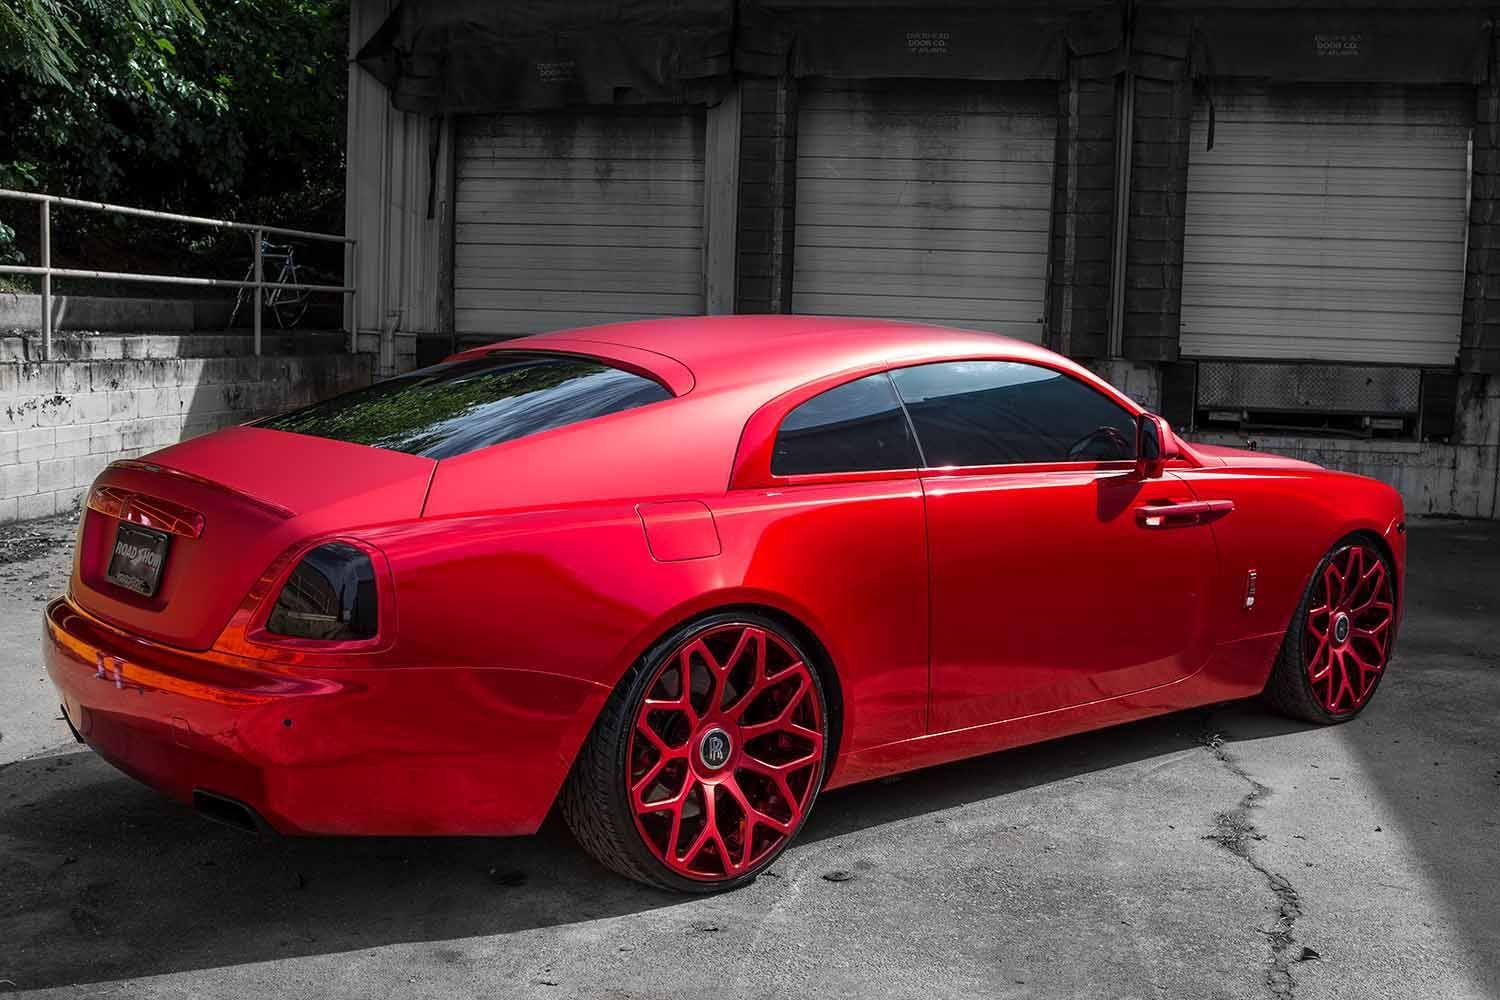 Dark Smoke Taillights on Red Rolls Royce Wraith - Photo by Forgiato